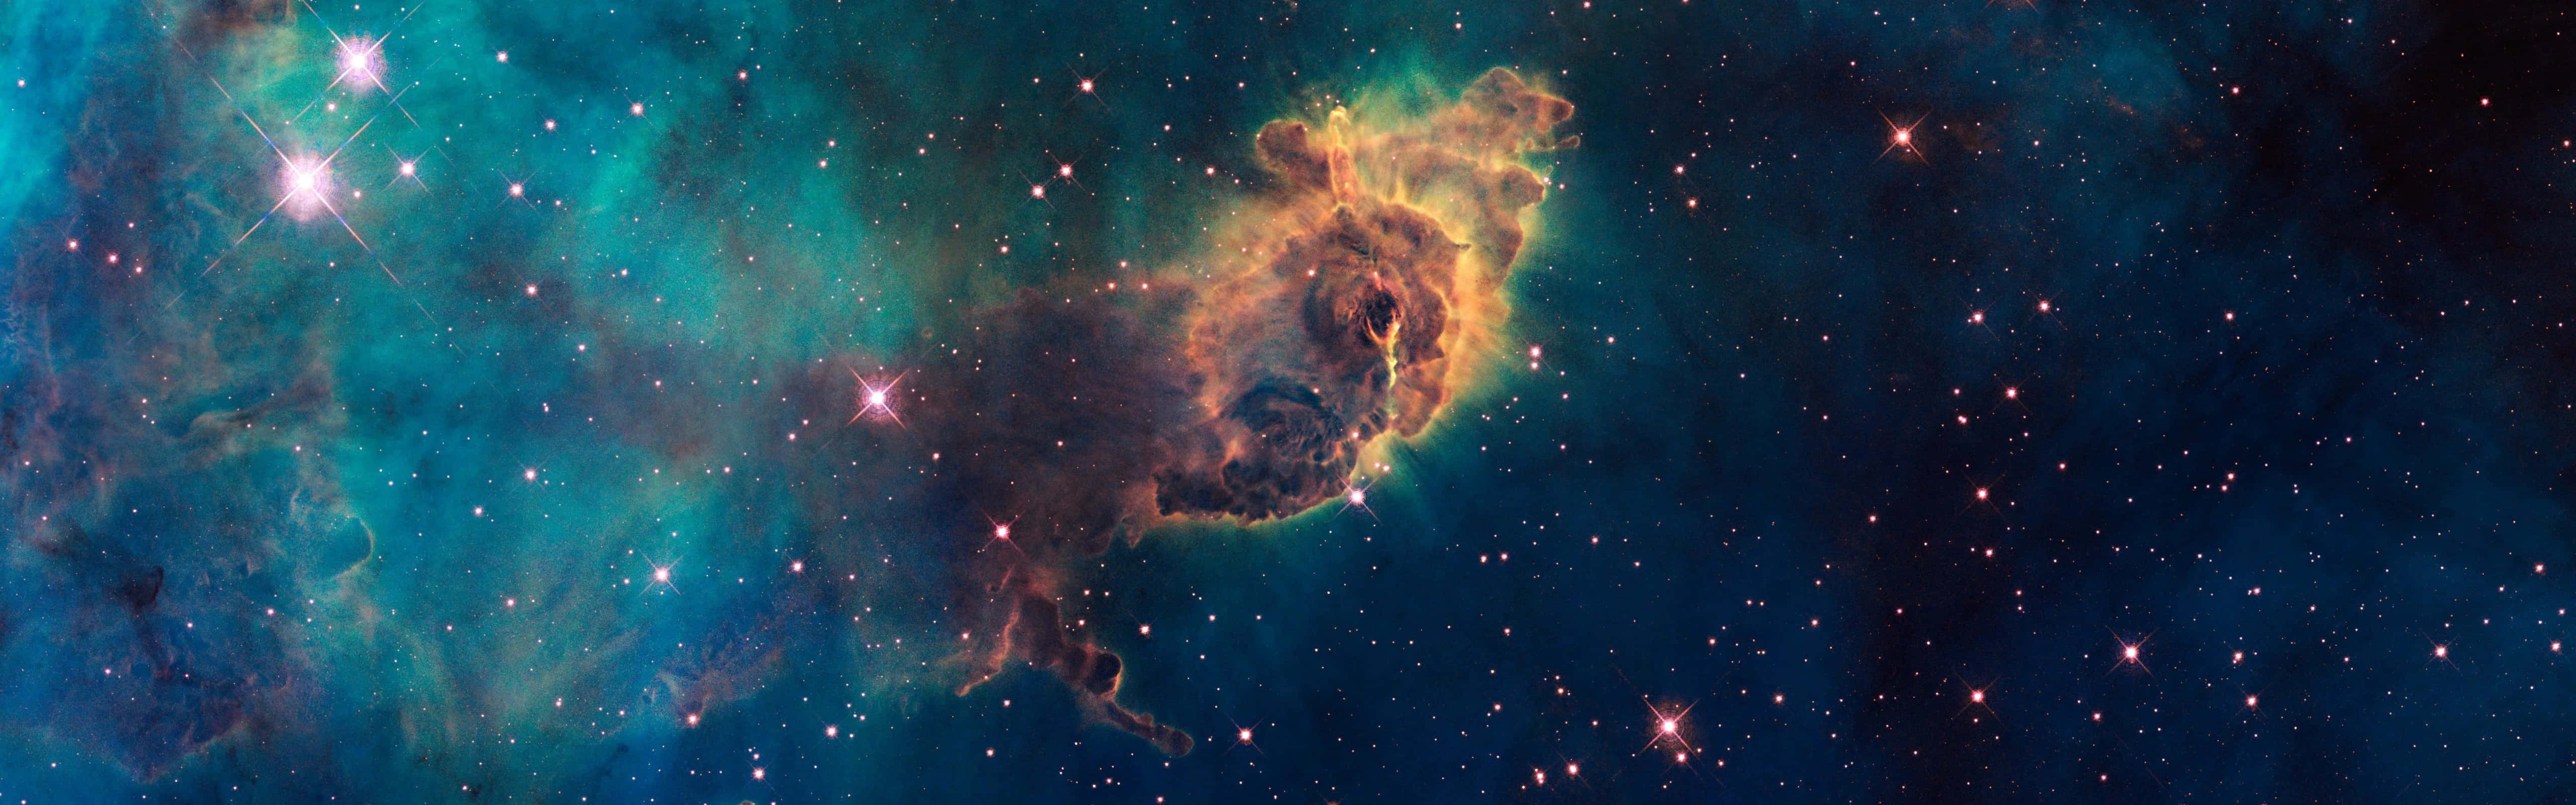 Dual Screen Space Carina Nebula Wallpaper